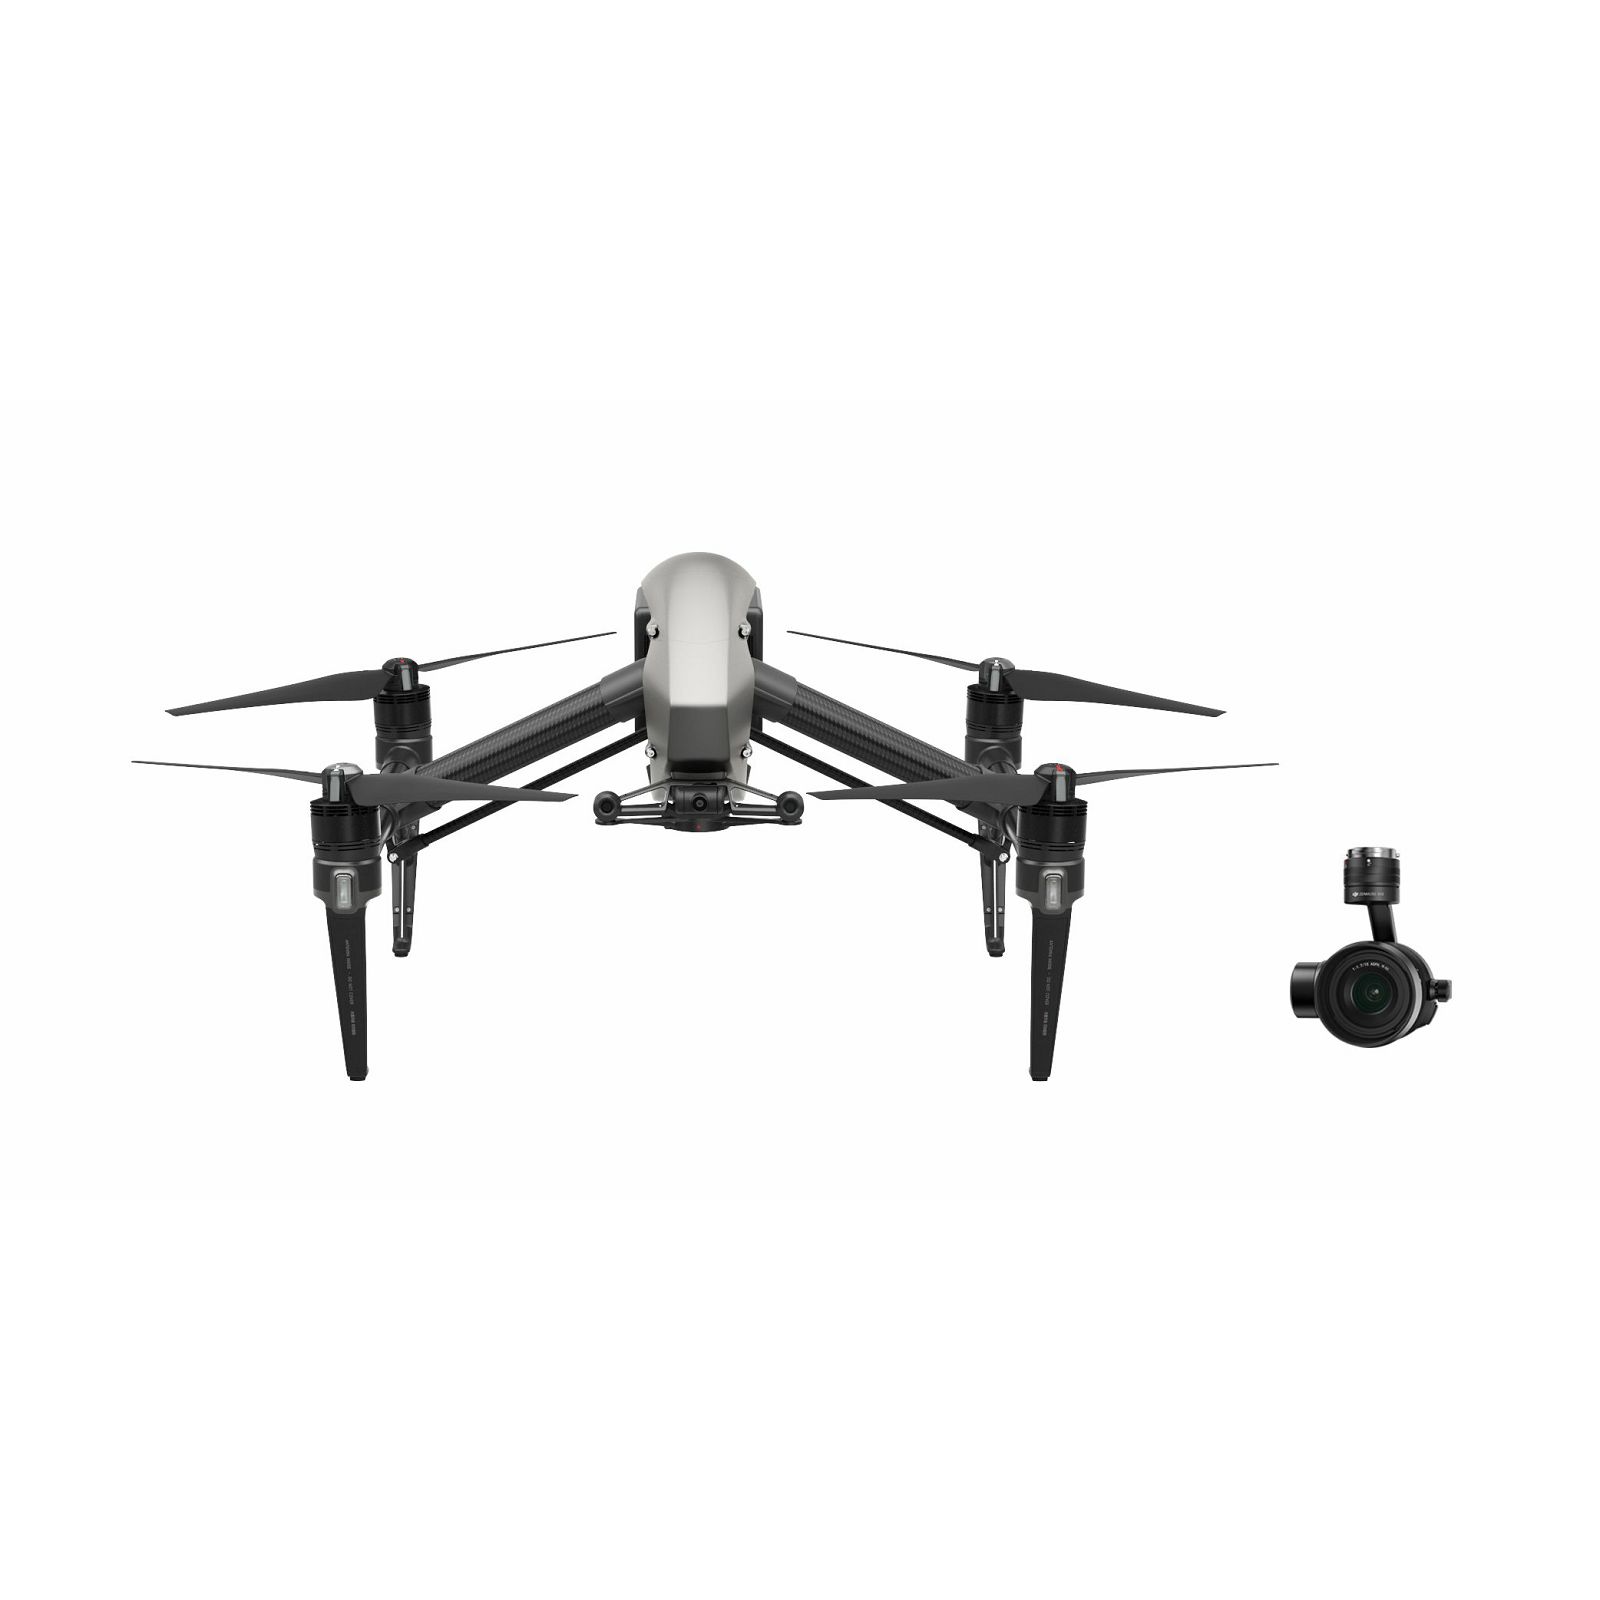 DJI Inspire 2 Premium Combo dron + Zenmuse X5S + CinemaDNG and Apple ProRes License Key profesionalni dron quadcopter s 5.2K i 4K kamerom i gimbal stabilizatorom